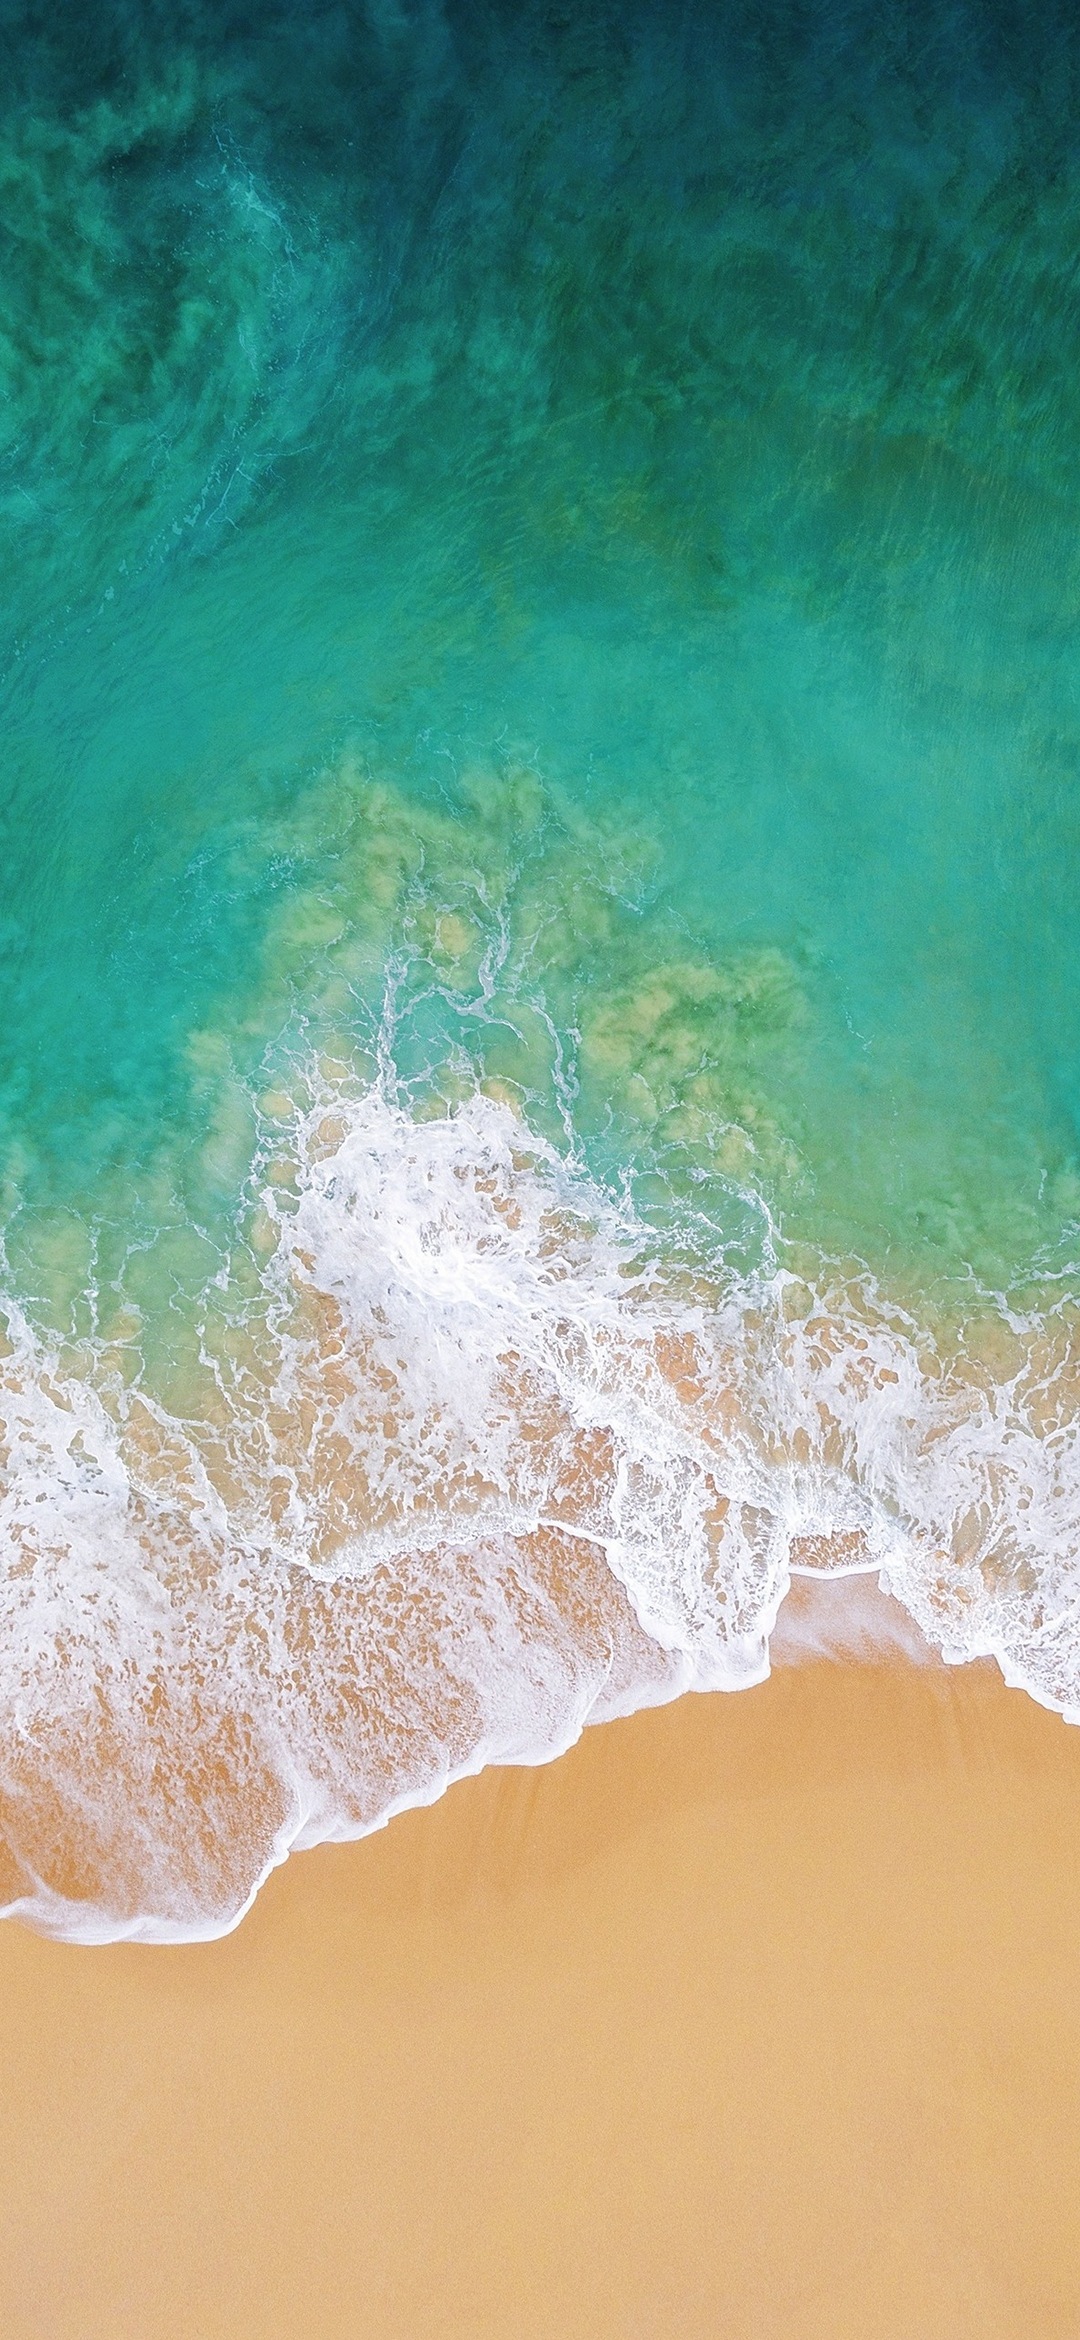 Shading Green Sea And Sandy Beach Redmi 9t Android スマホ壁紙 待ち受け スマラン